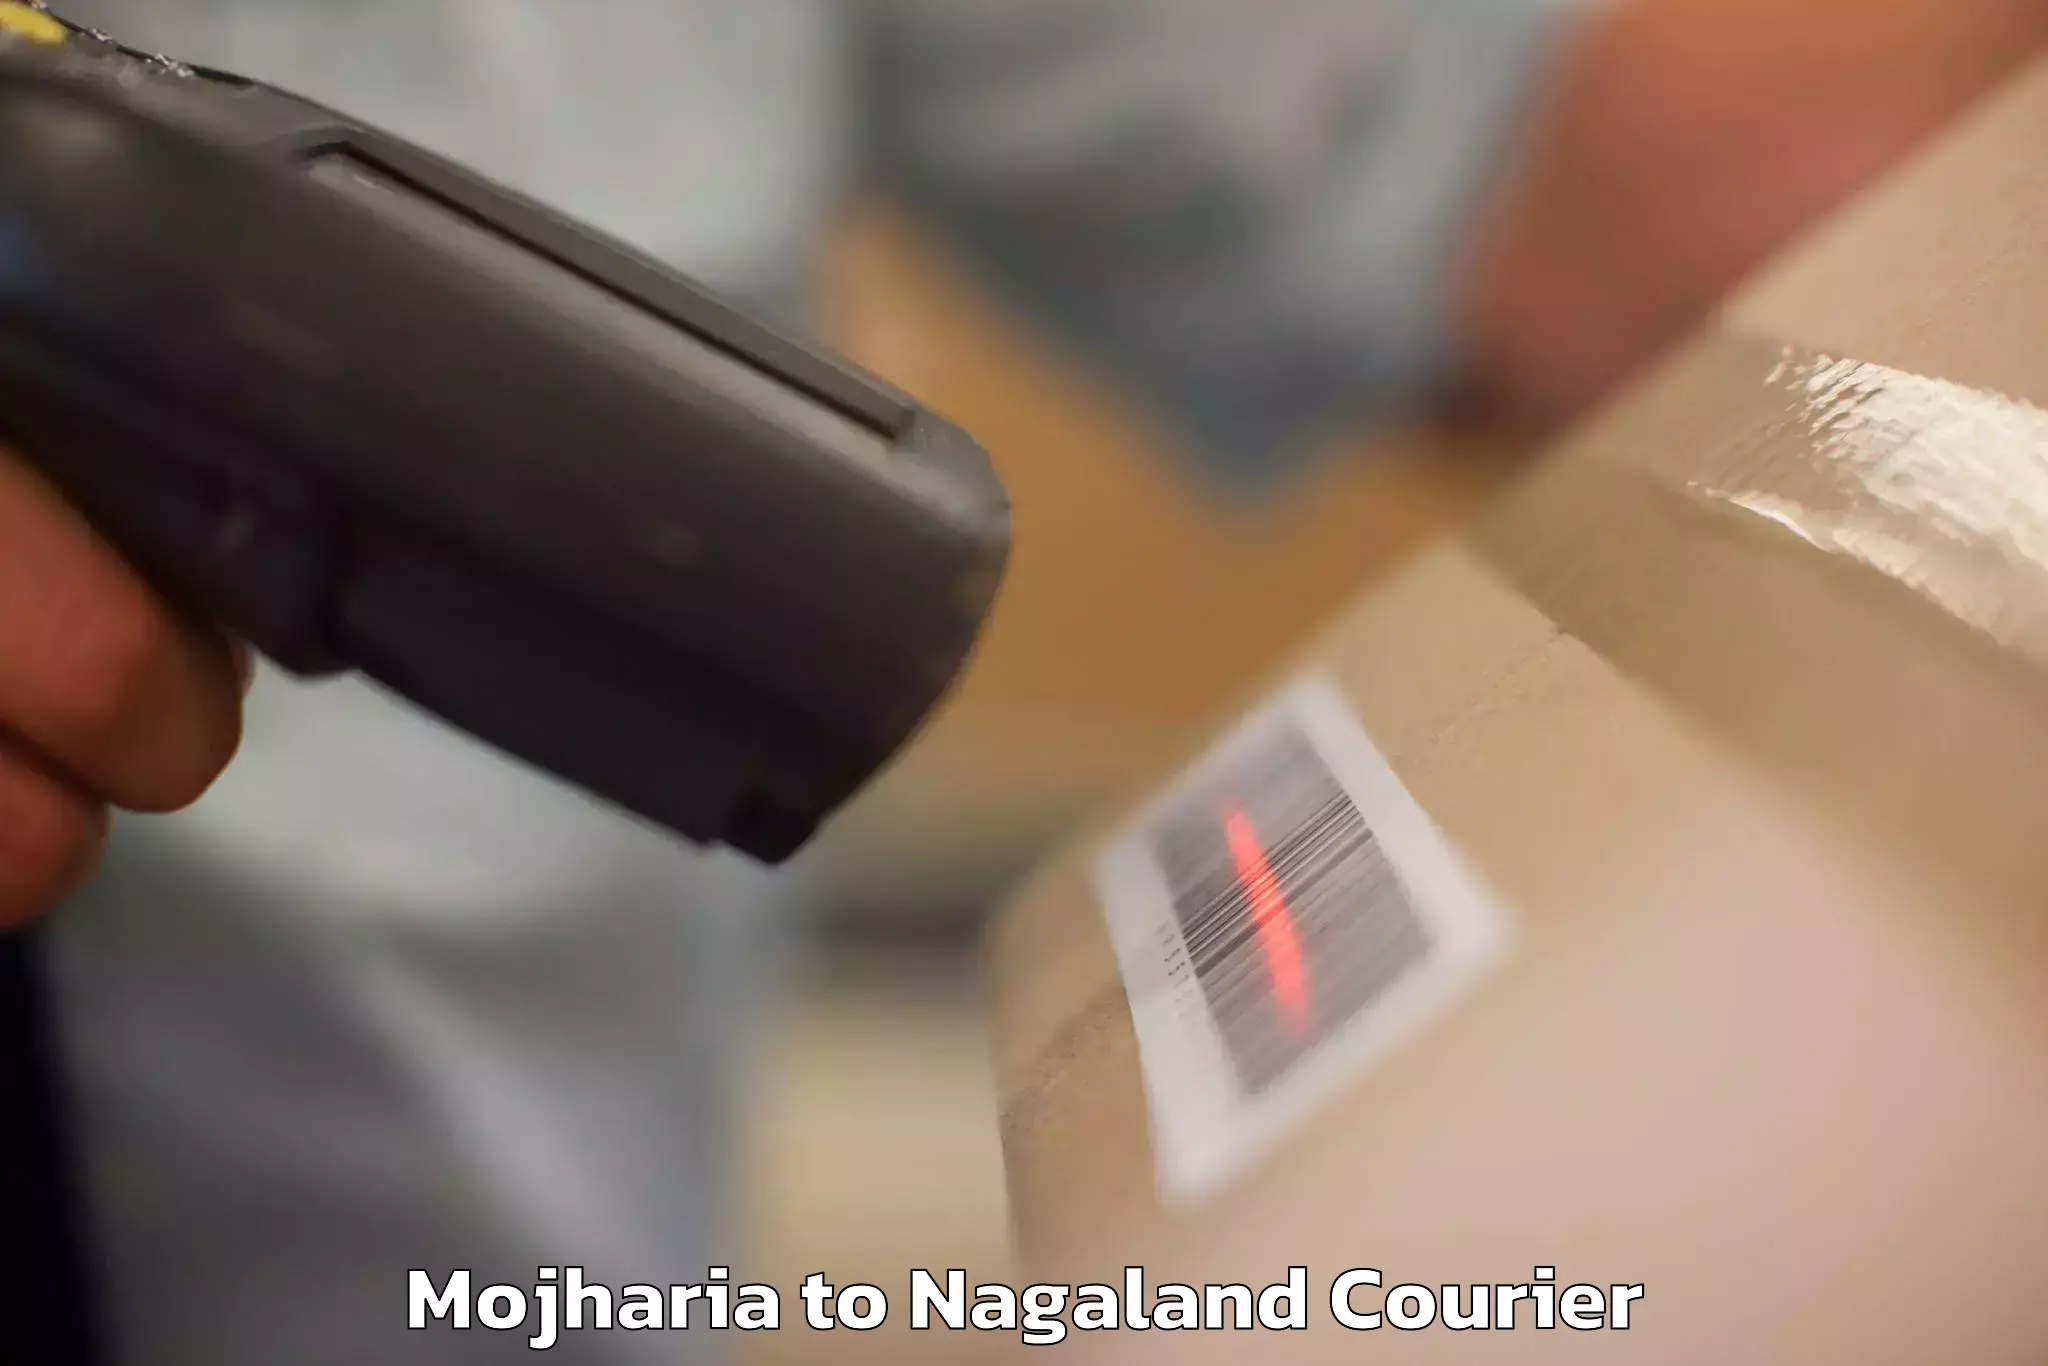 Door-to-door baggage service Mojharia to Nagaland